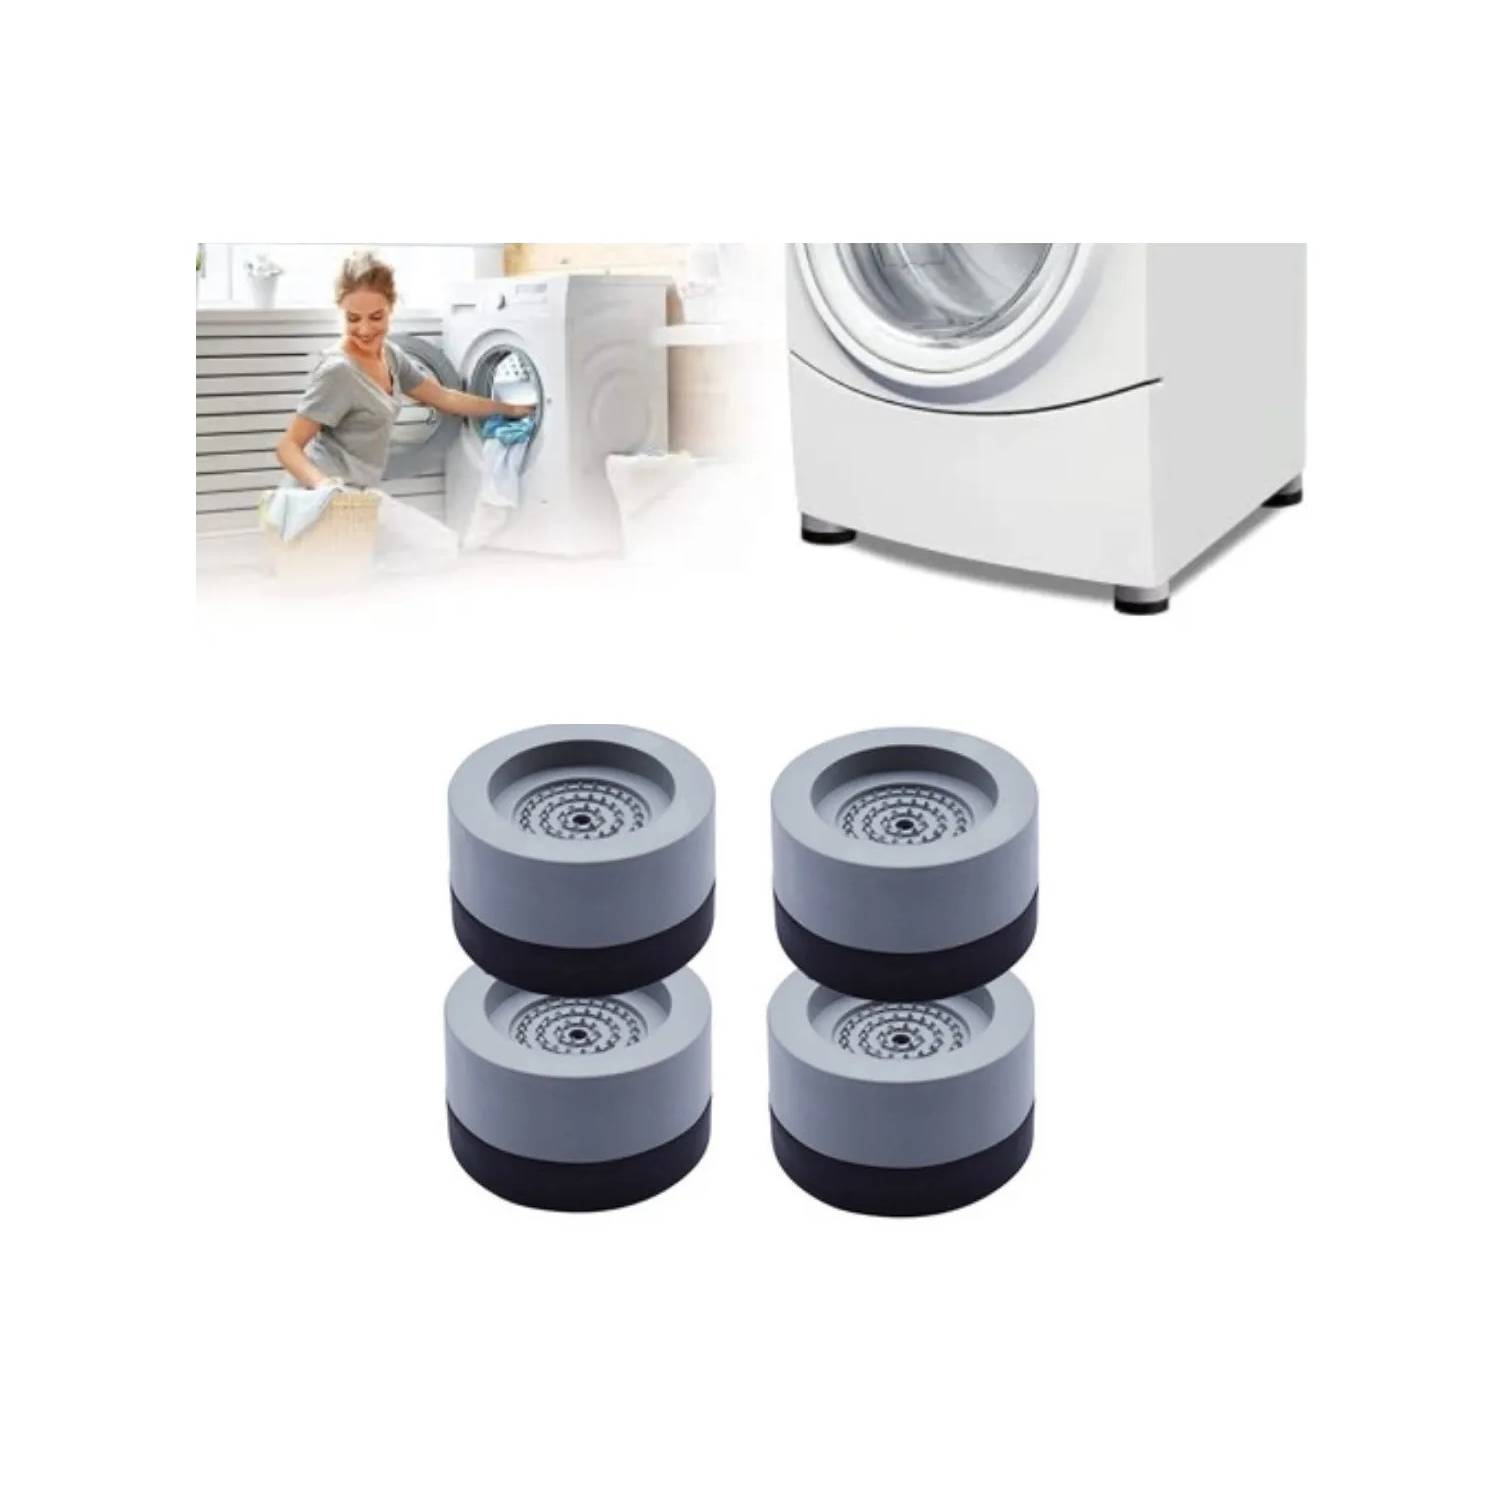 Paquete de 4 almohadillas vibración para lavadora que evitan , sacudidas,  almohadillas deslizantes p Sunnimix Pads anti vibración